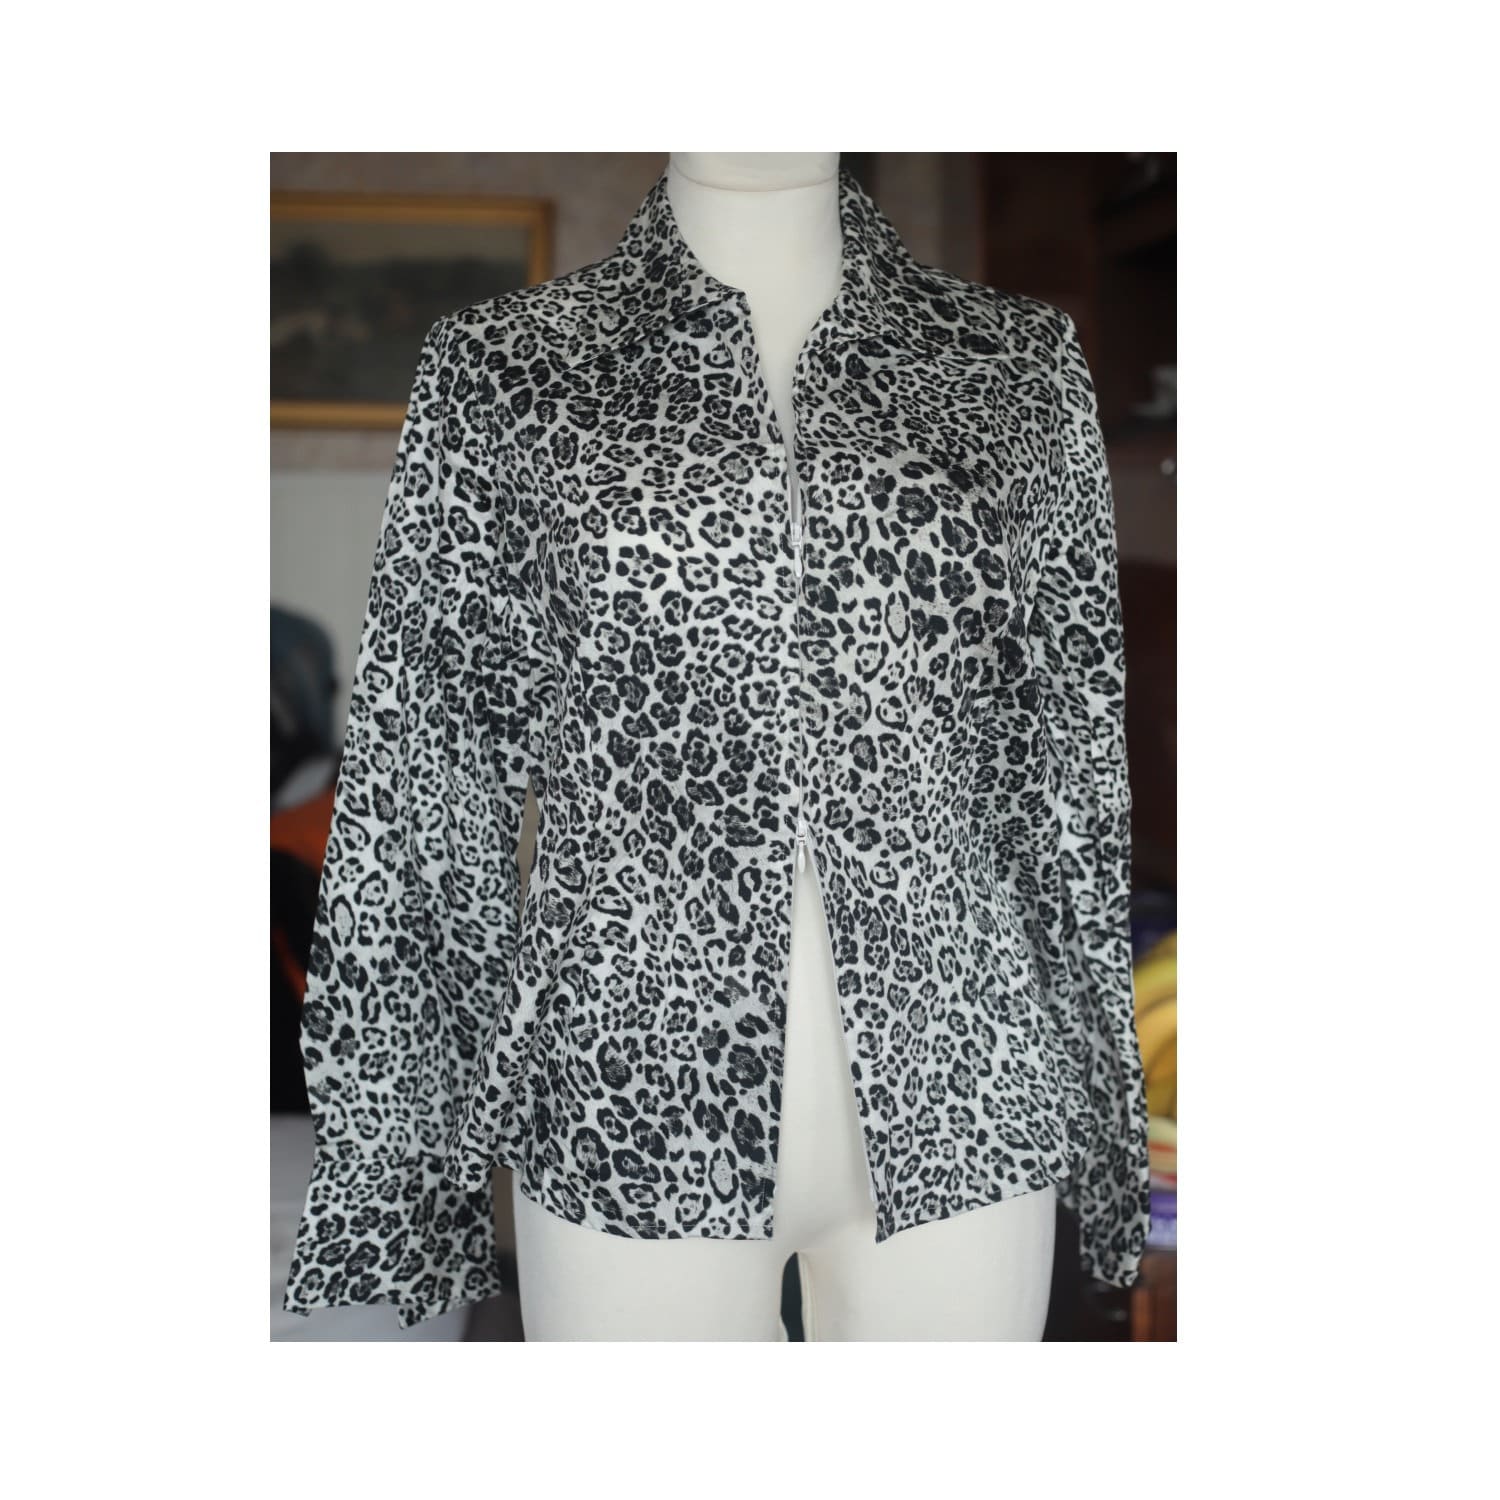 Monochrome Leopard :: White Denim & Printed Blouse - Color & Chic